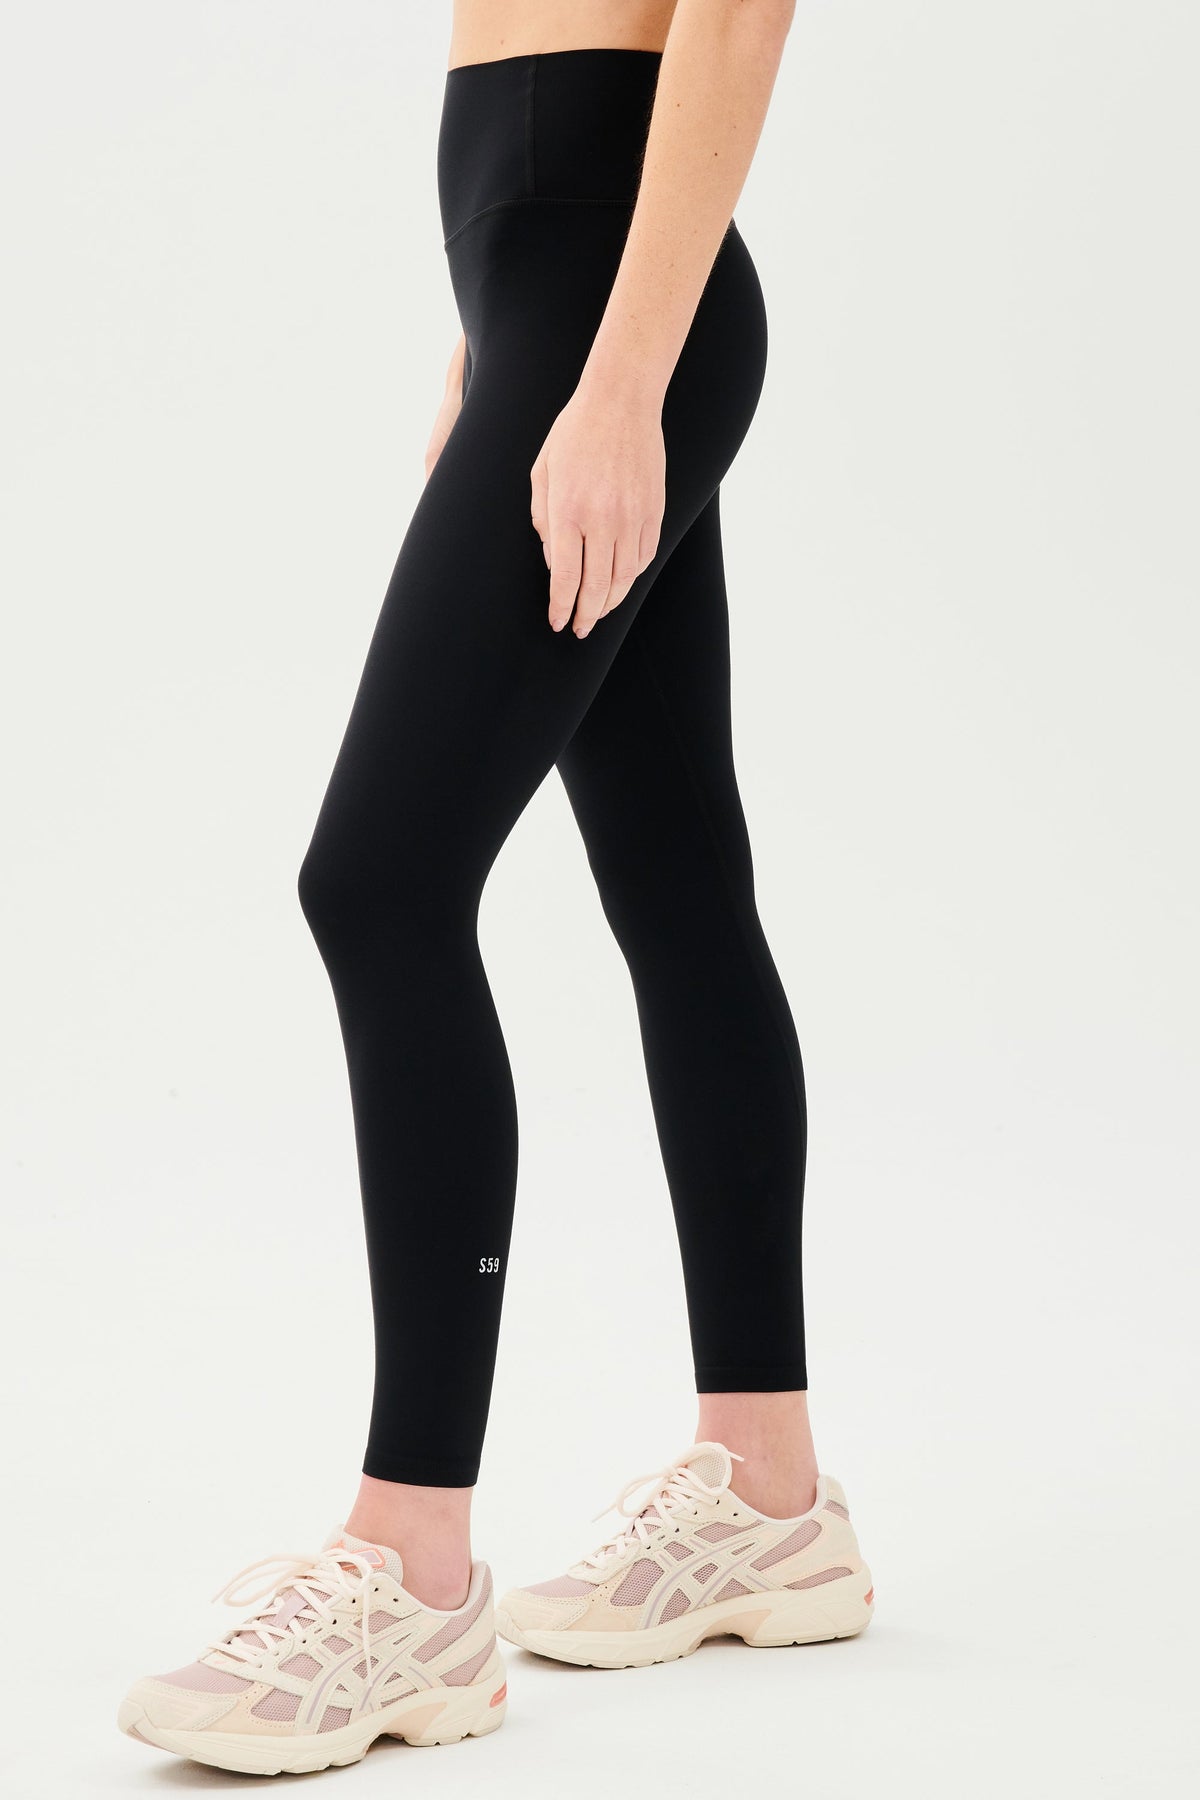 ALO Yoga, Pants & Jumpsuits, Alo Highwaist Cargo Legging Black Xs